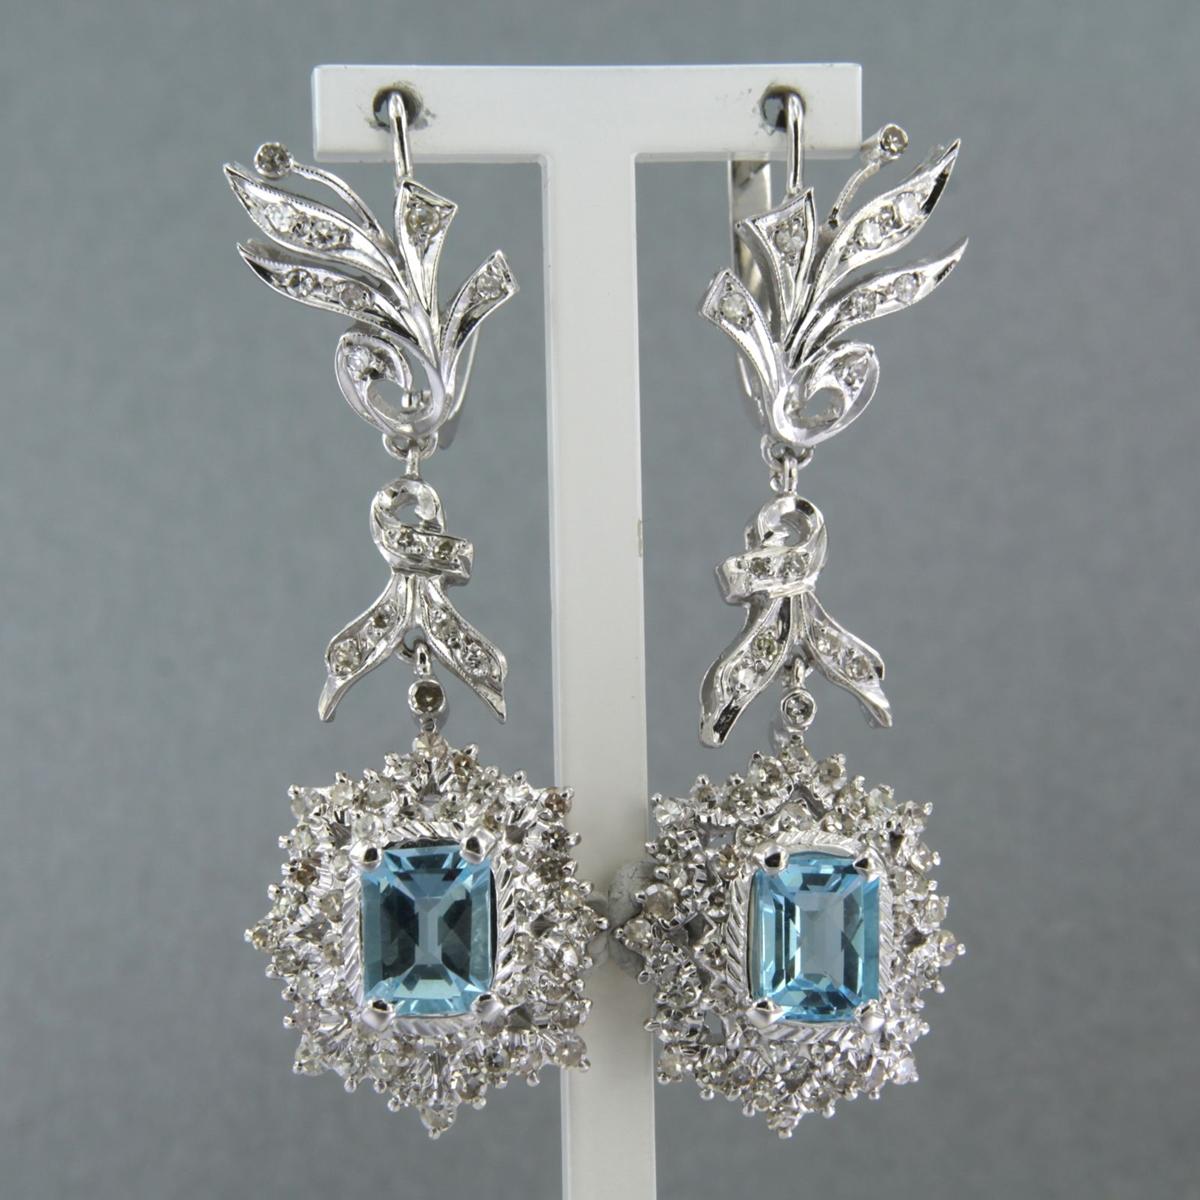 Topaz Diamond 14k White Gold Chandelier Earrings
Shining blue topaz 5.00 carat with diamonds 3.24 carat set in white gold.

Dimensions : (height x width) 5.7 cm x 2.7 cm
Weight : 20.8 gram

Set with:
- 2 x 9,0 mm x 7,0 mm emerald cut blue topaz,